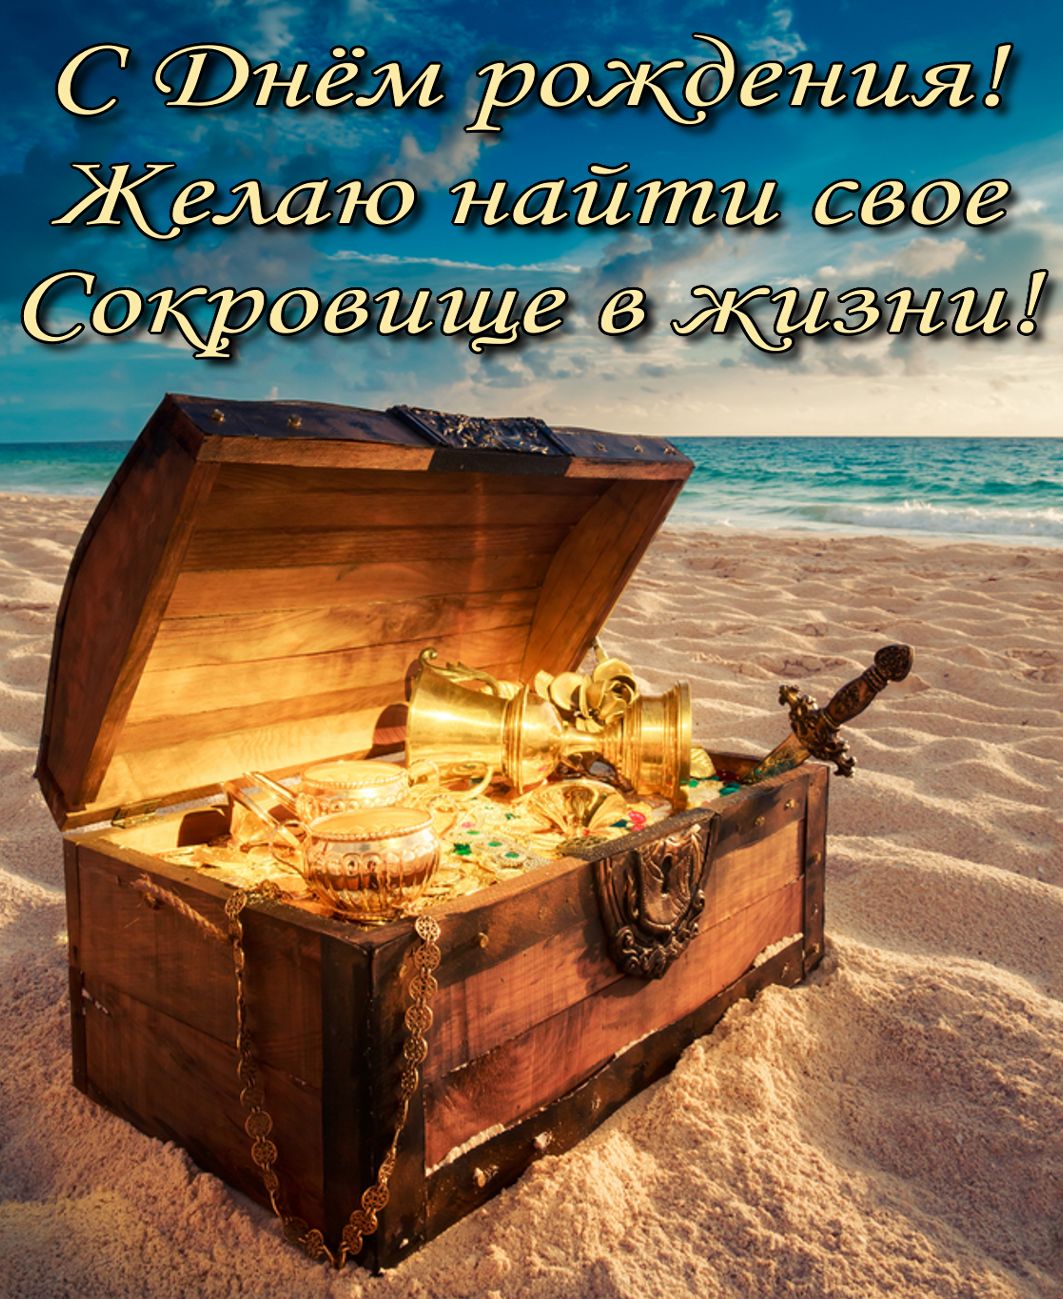 Открытка - сундук с сокровищами на берегу моря